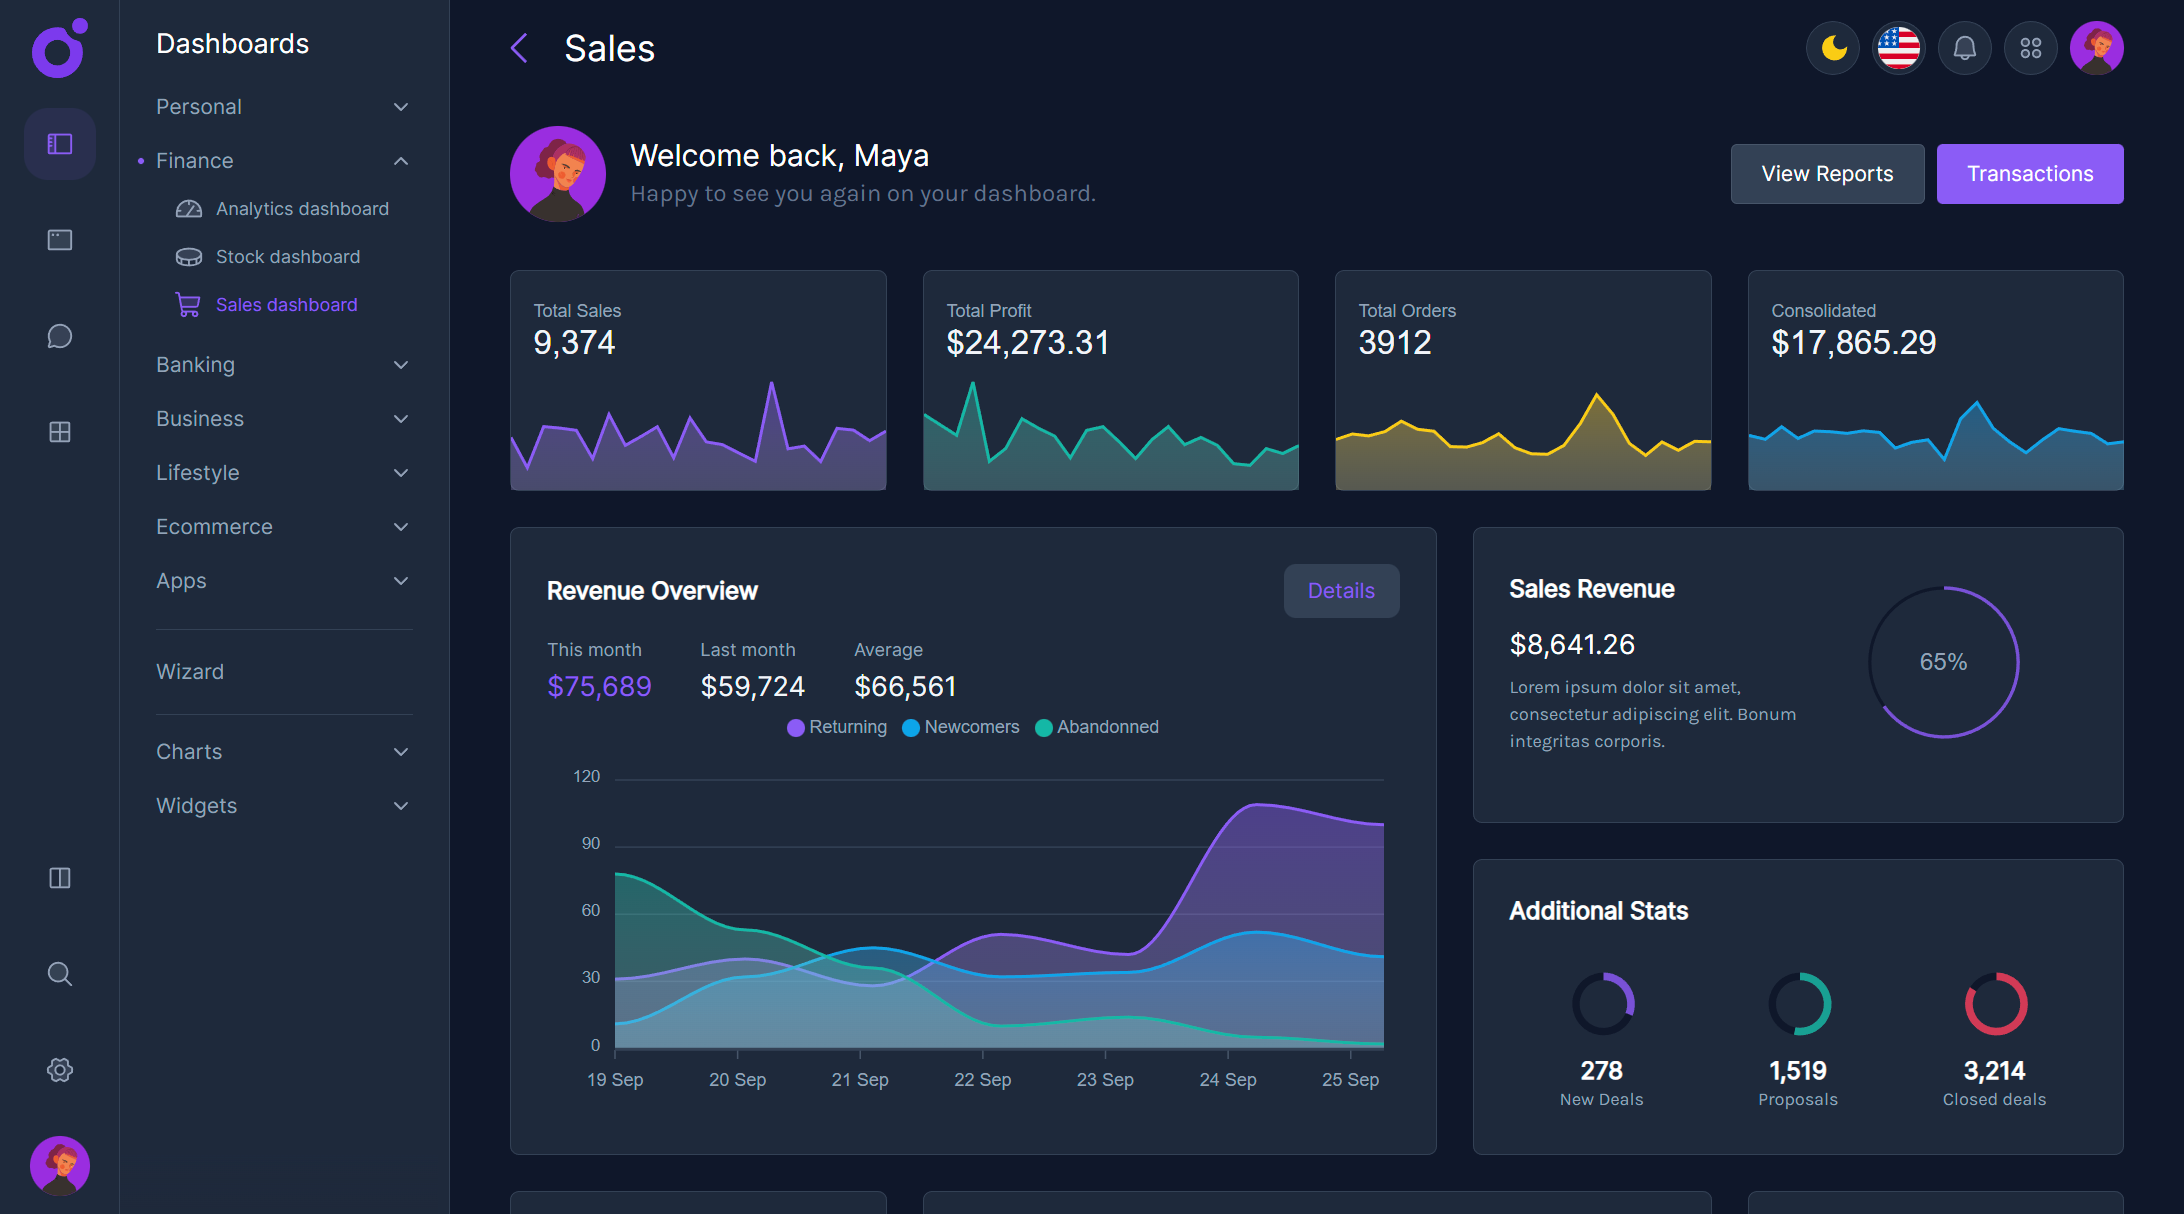 Tairo - Sales dashboard